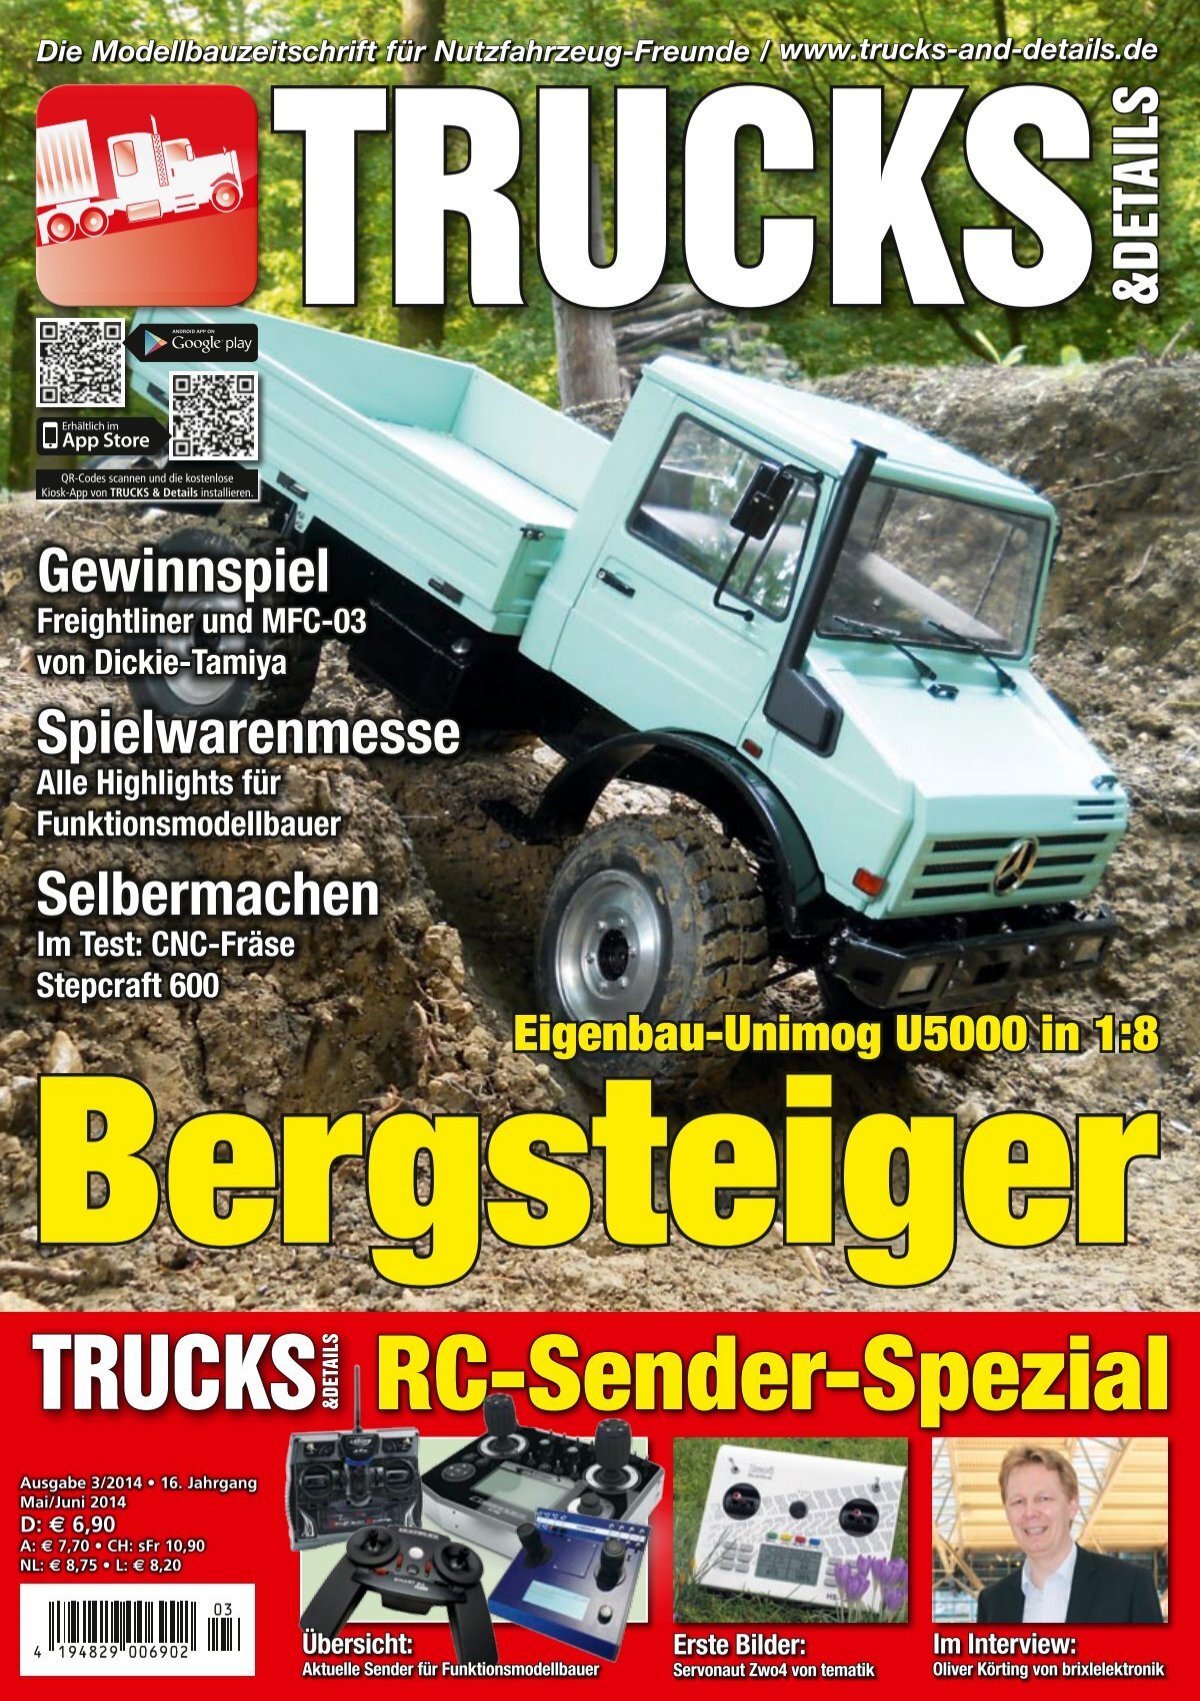 TRUCKS & Details Eigenbau-Unimog U5000 (Vorschau)